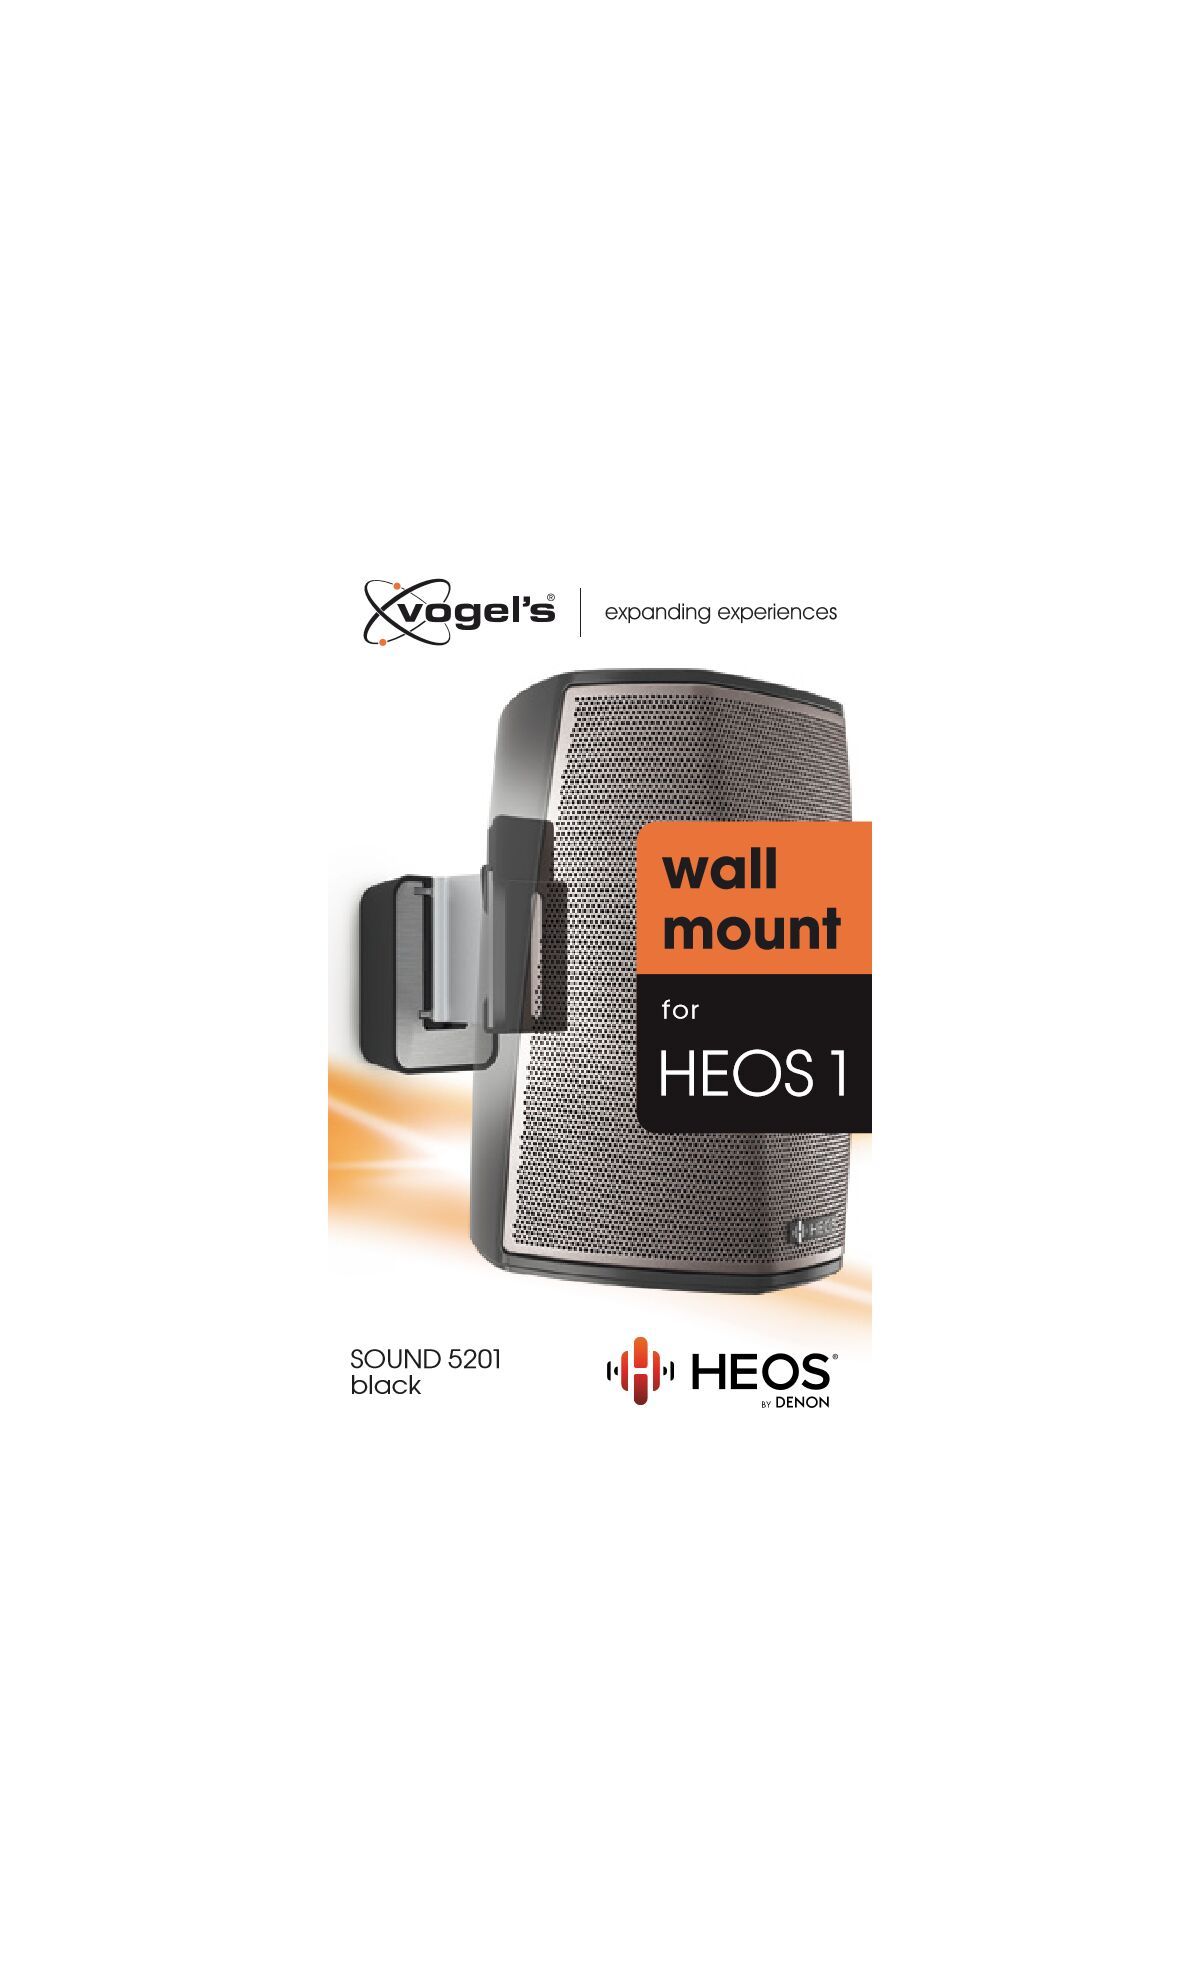 Vogel's SOUND 5201 Speaker Wall Mount for Denon HEOS 1 (black) - Packaging front